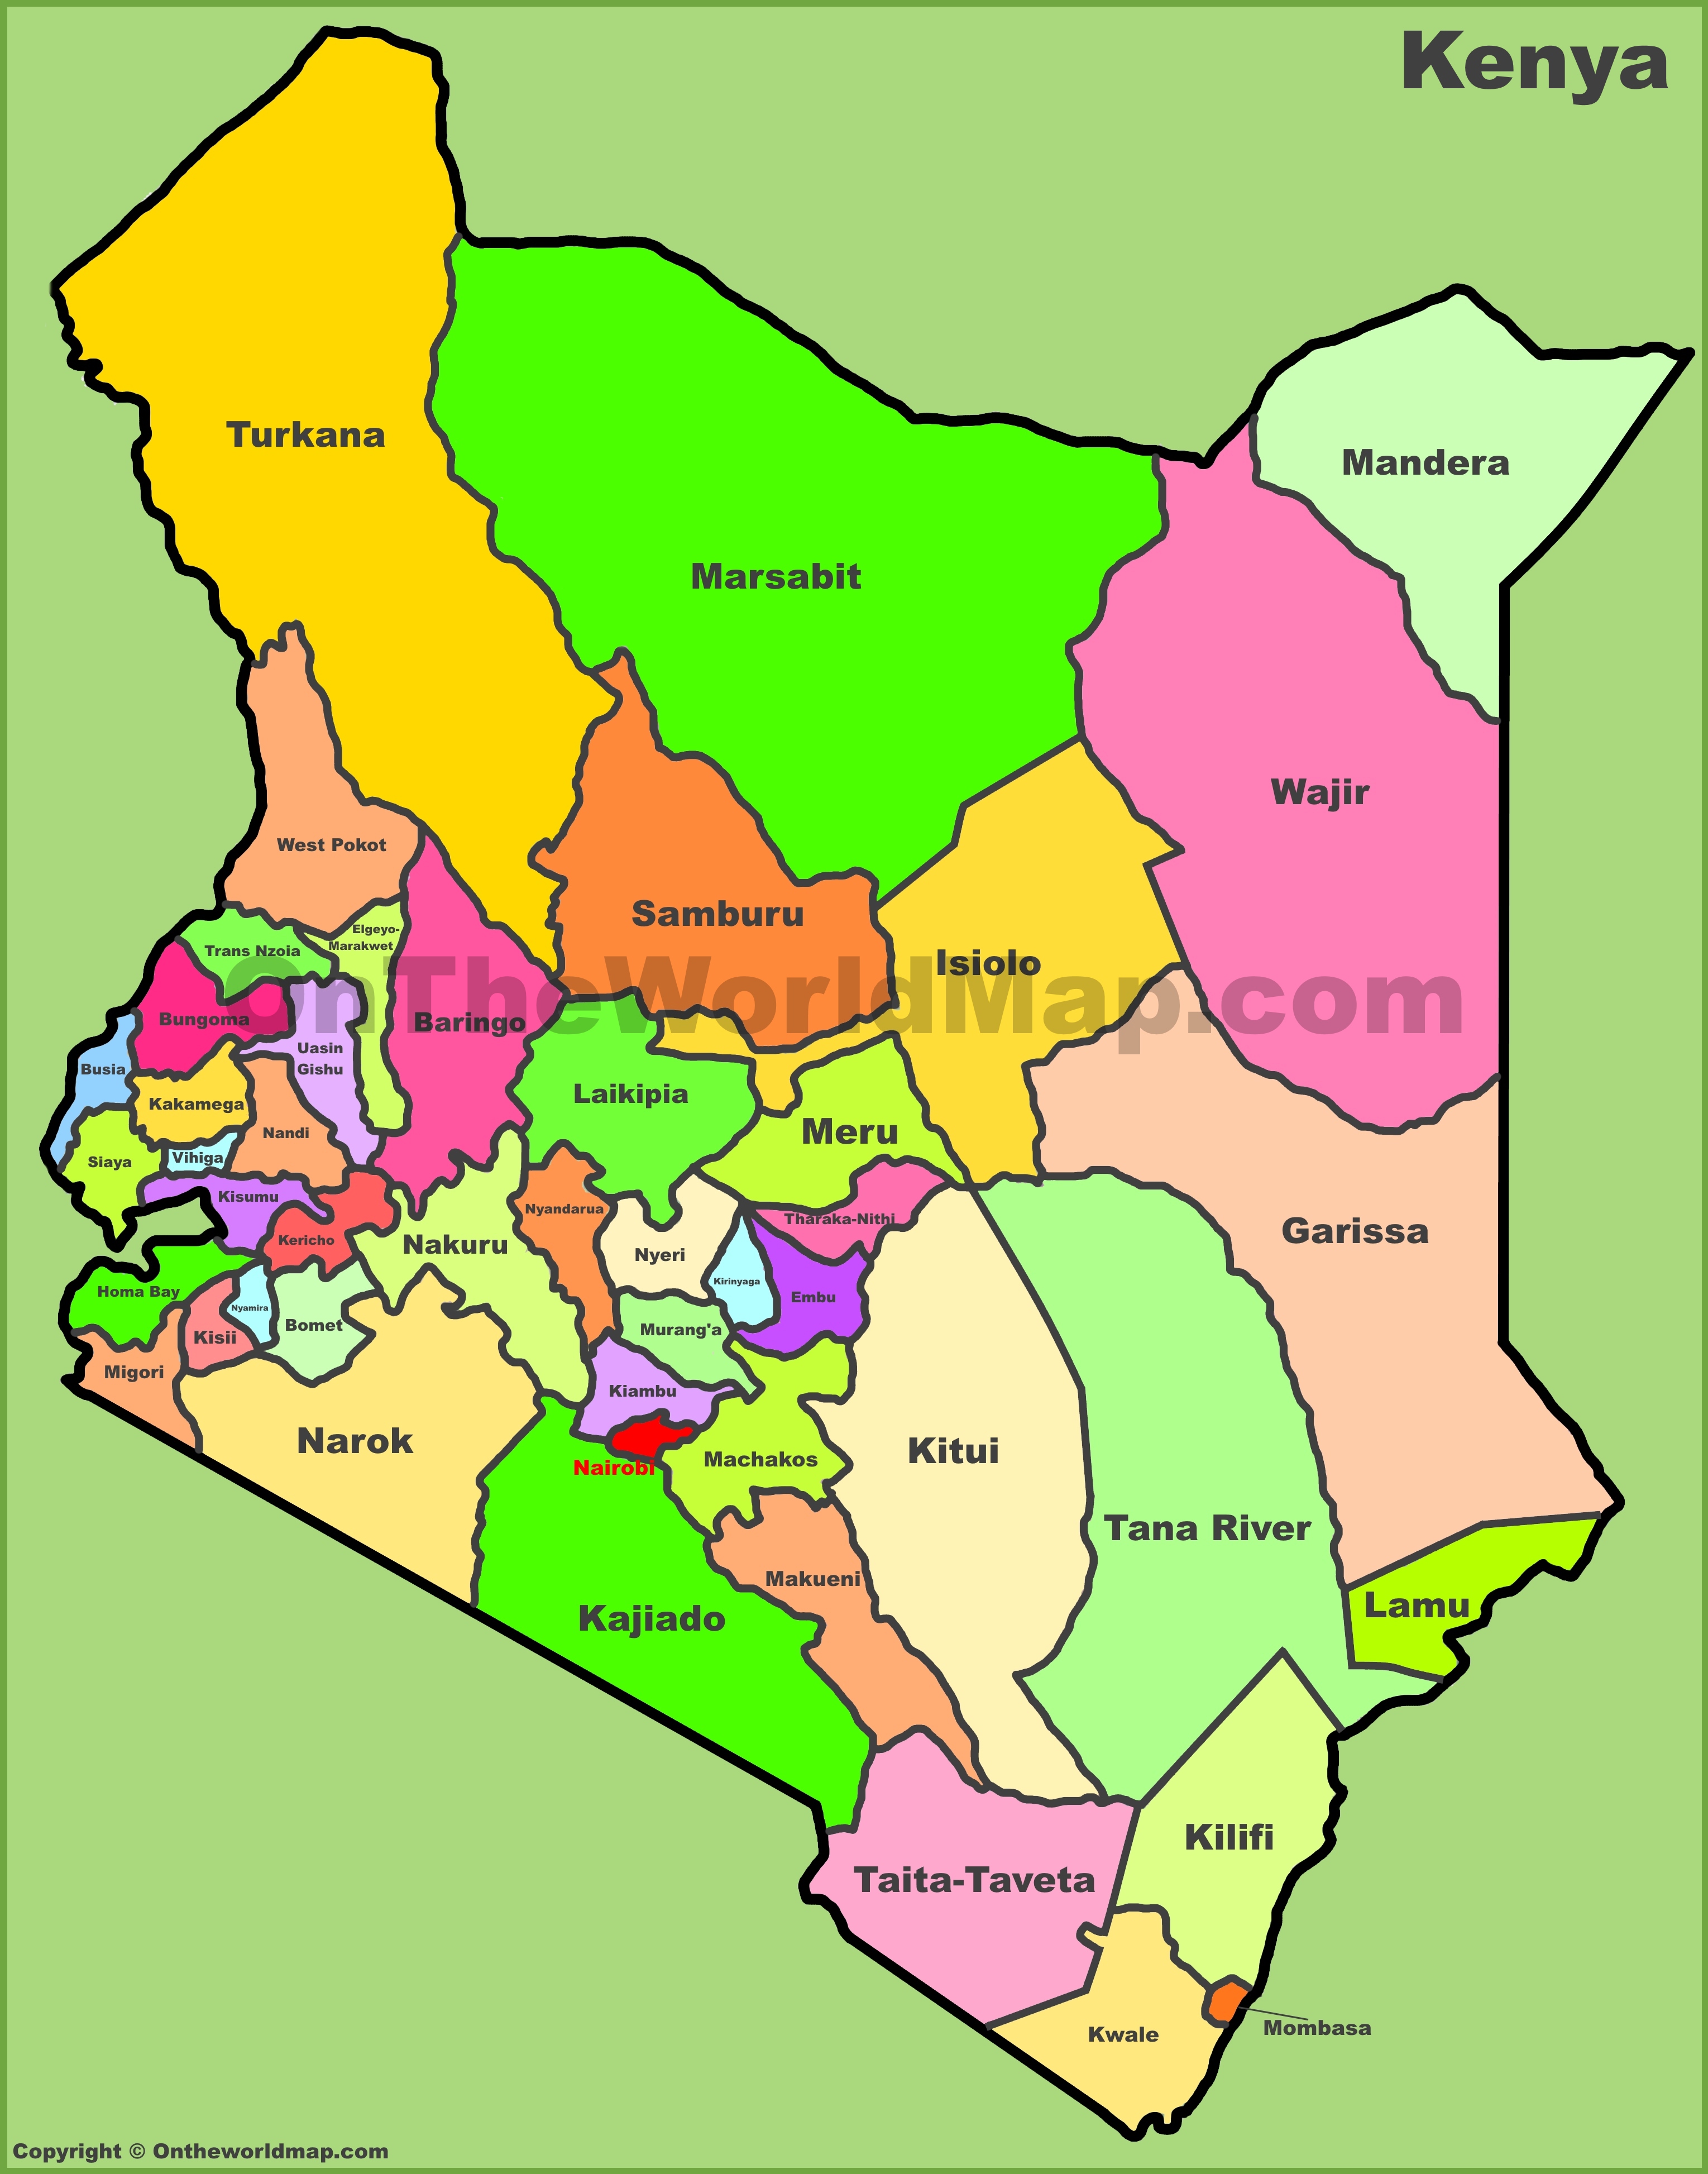 Kenya Political Map I Love Maps Images - vrogue.co